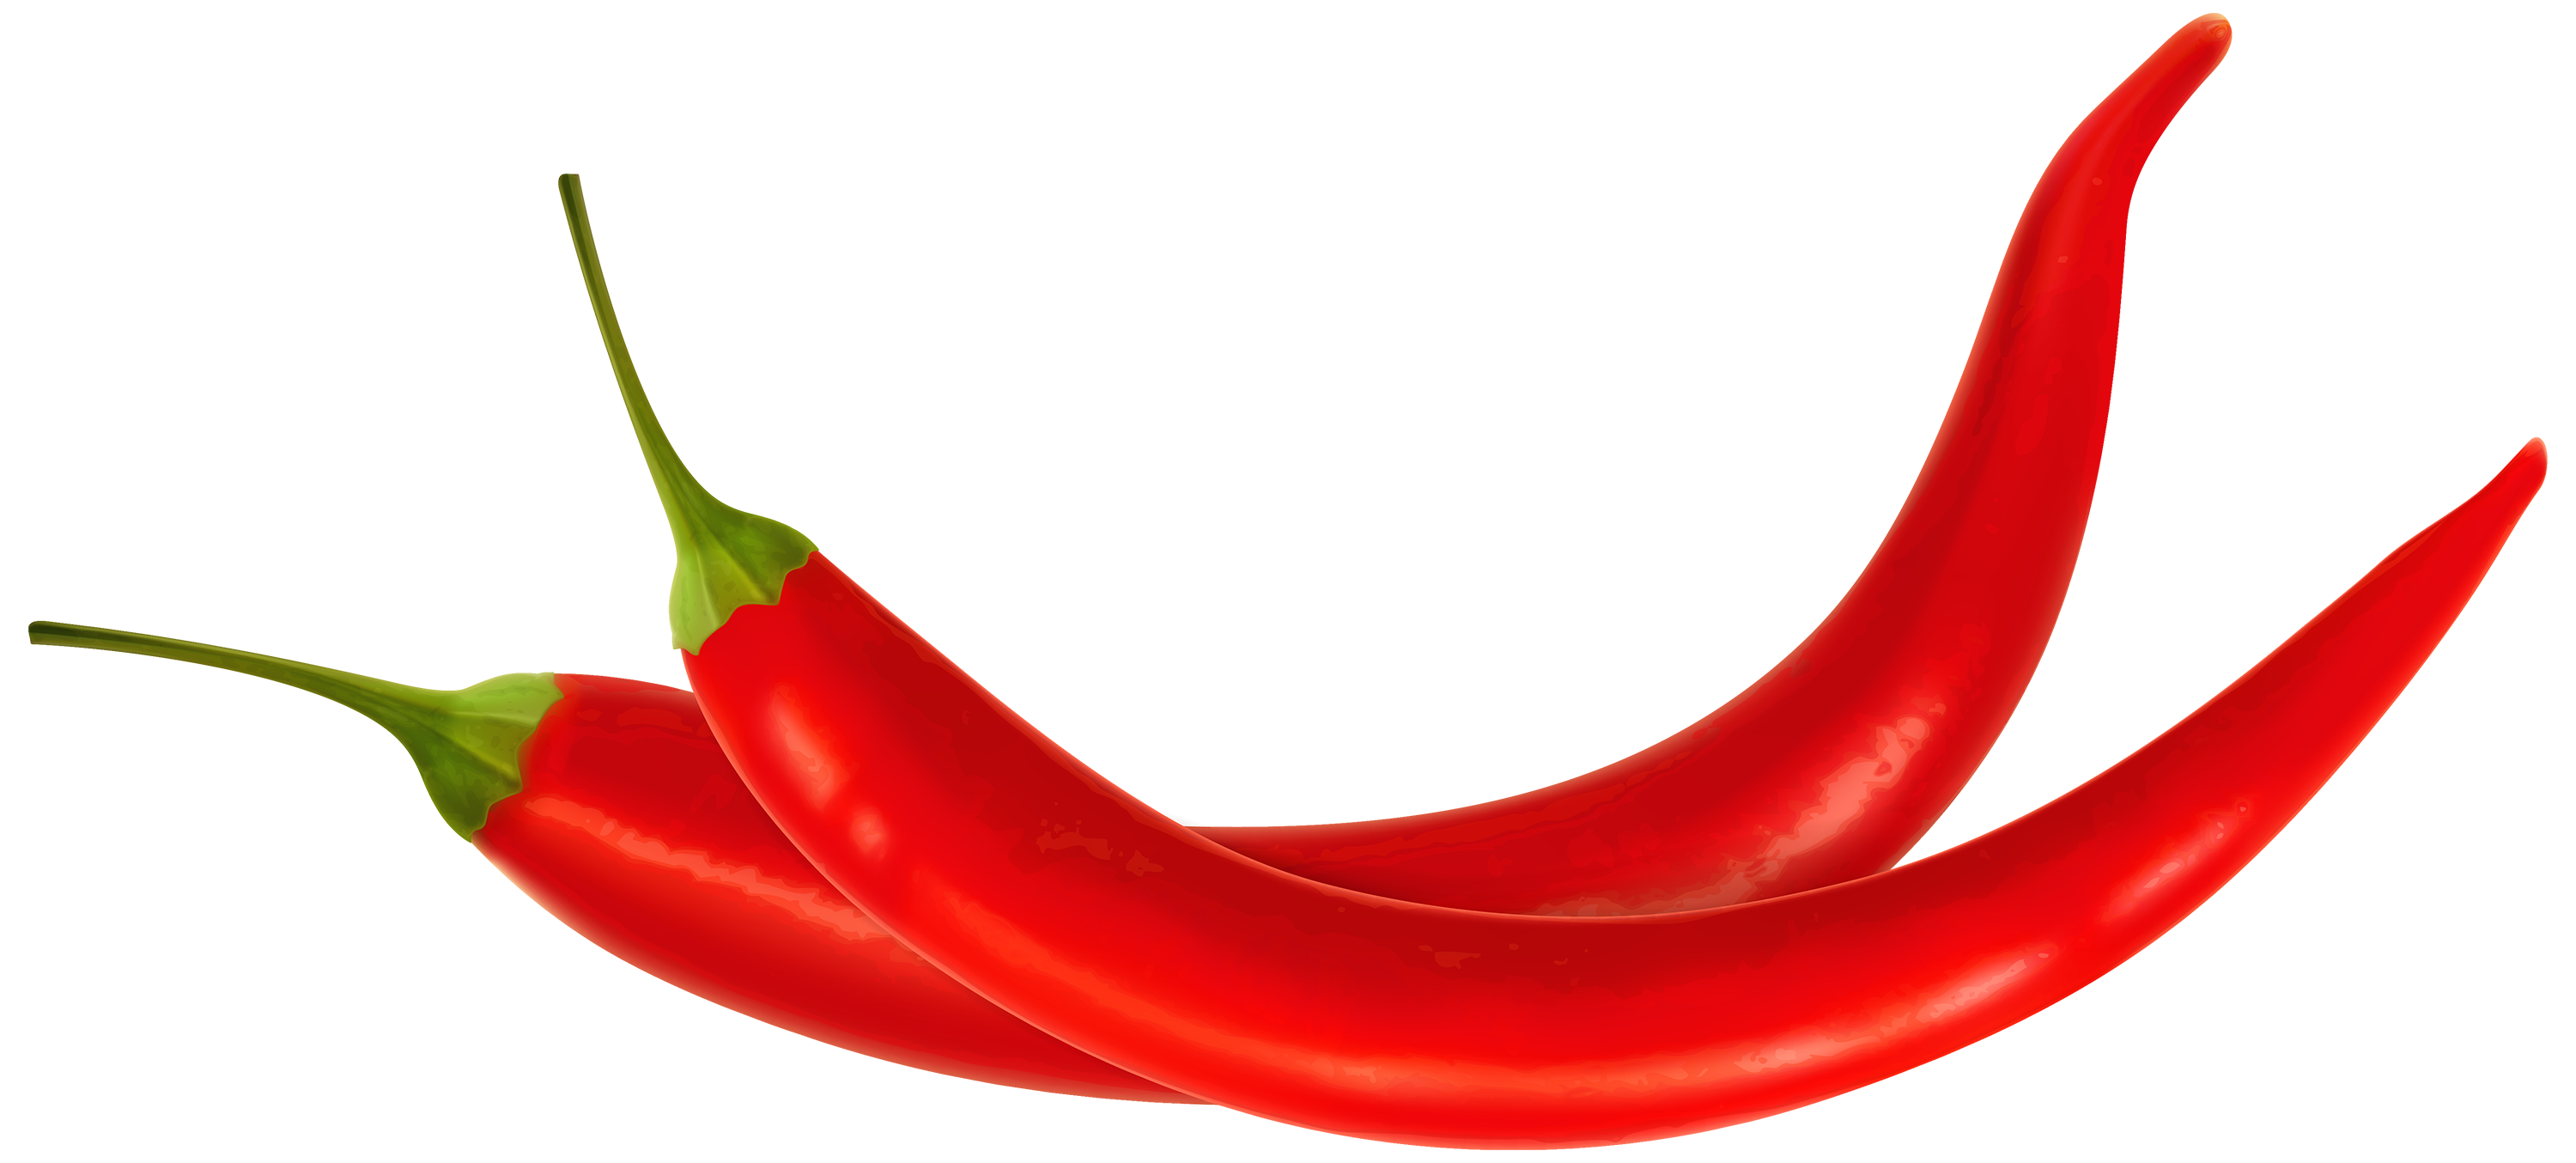 Vektor-grünes und rotes Chili-PNG-Bild